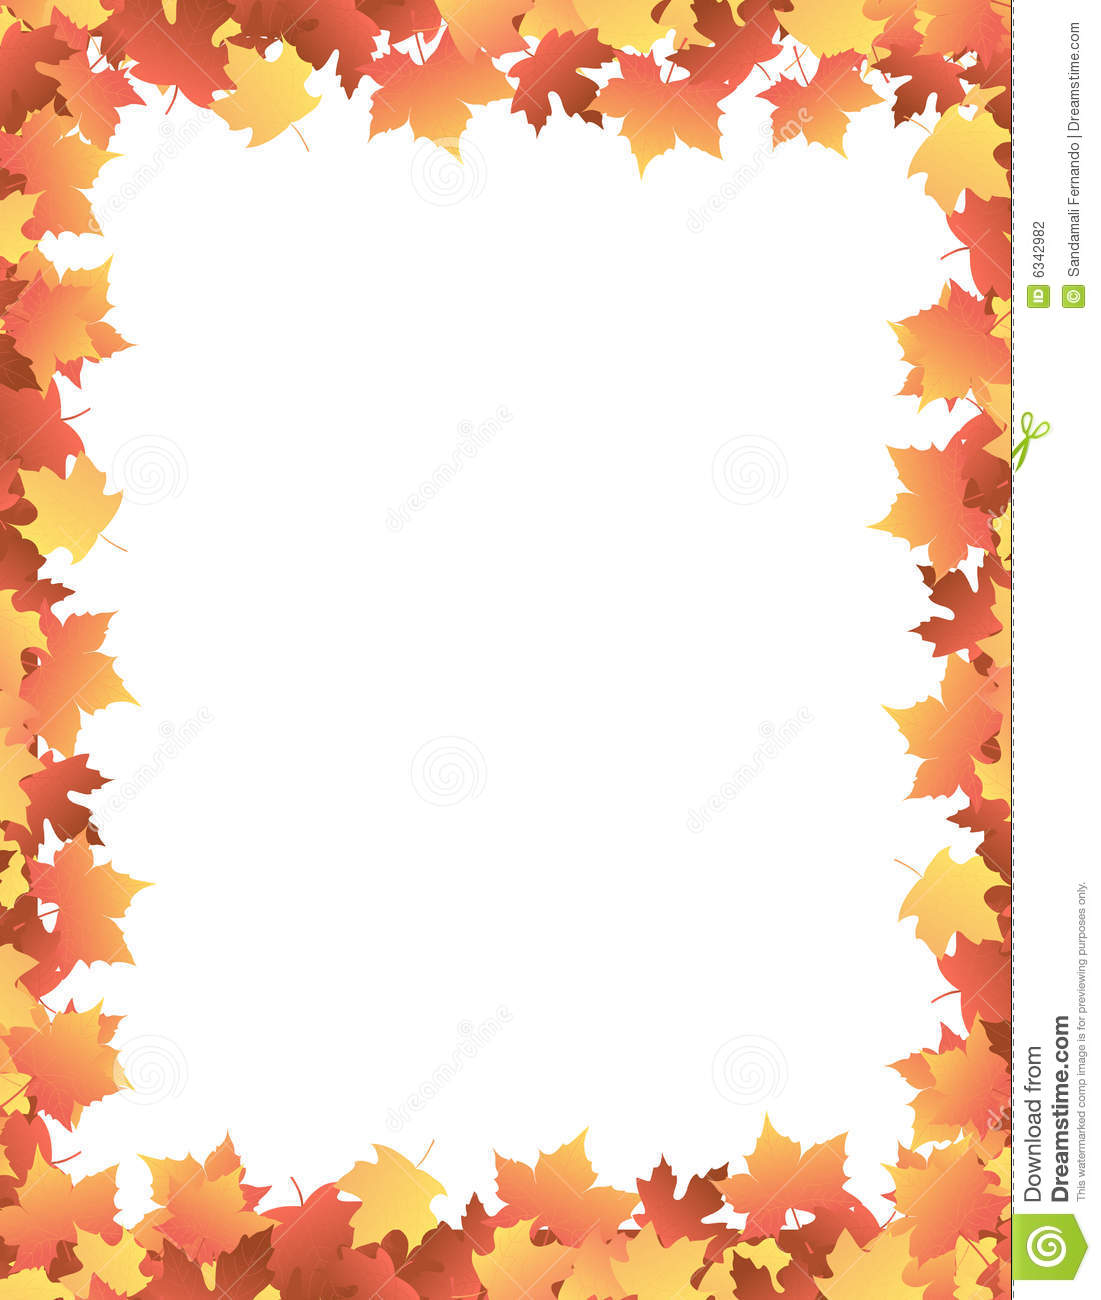 Fall Leaves Clip Art Border R - Autumn Border Clip Art